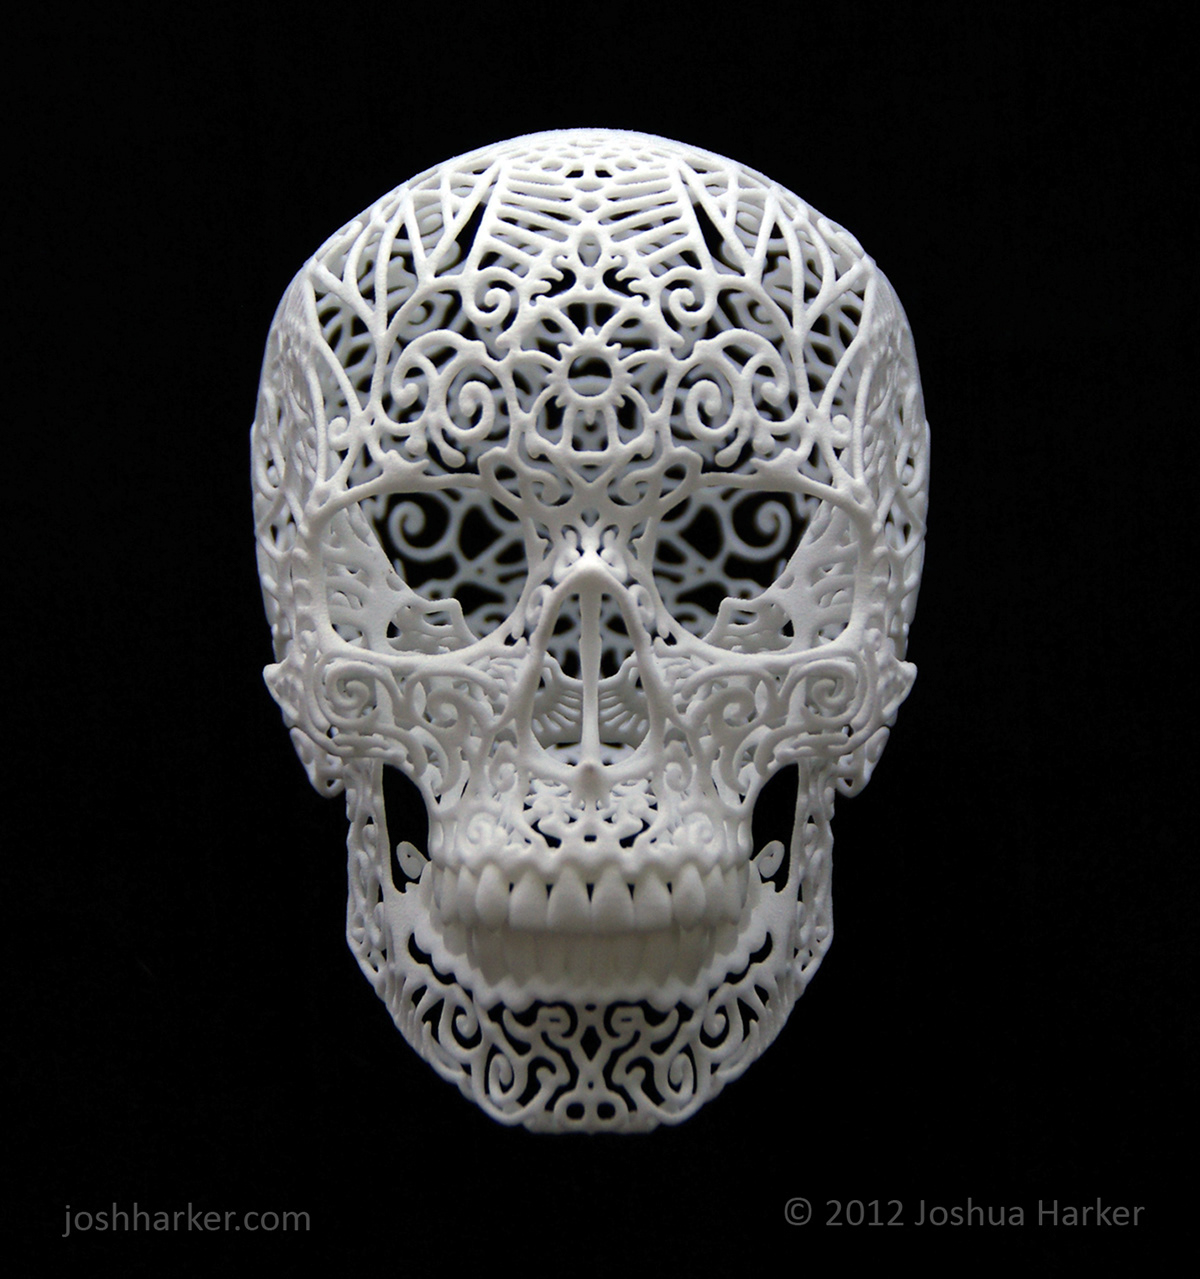 skull 3d printing 3D cad digital sculpture Kickstarter wings anatomica di revolutis